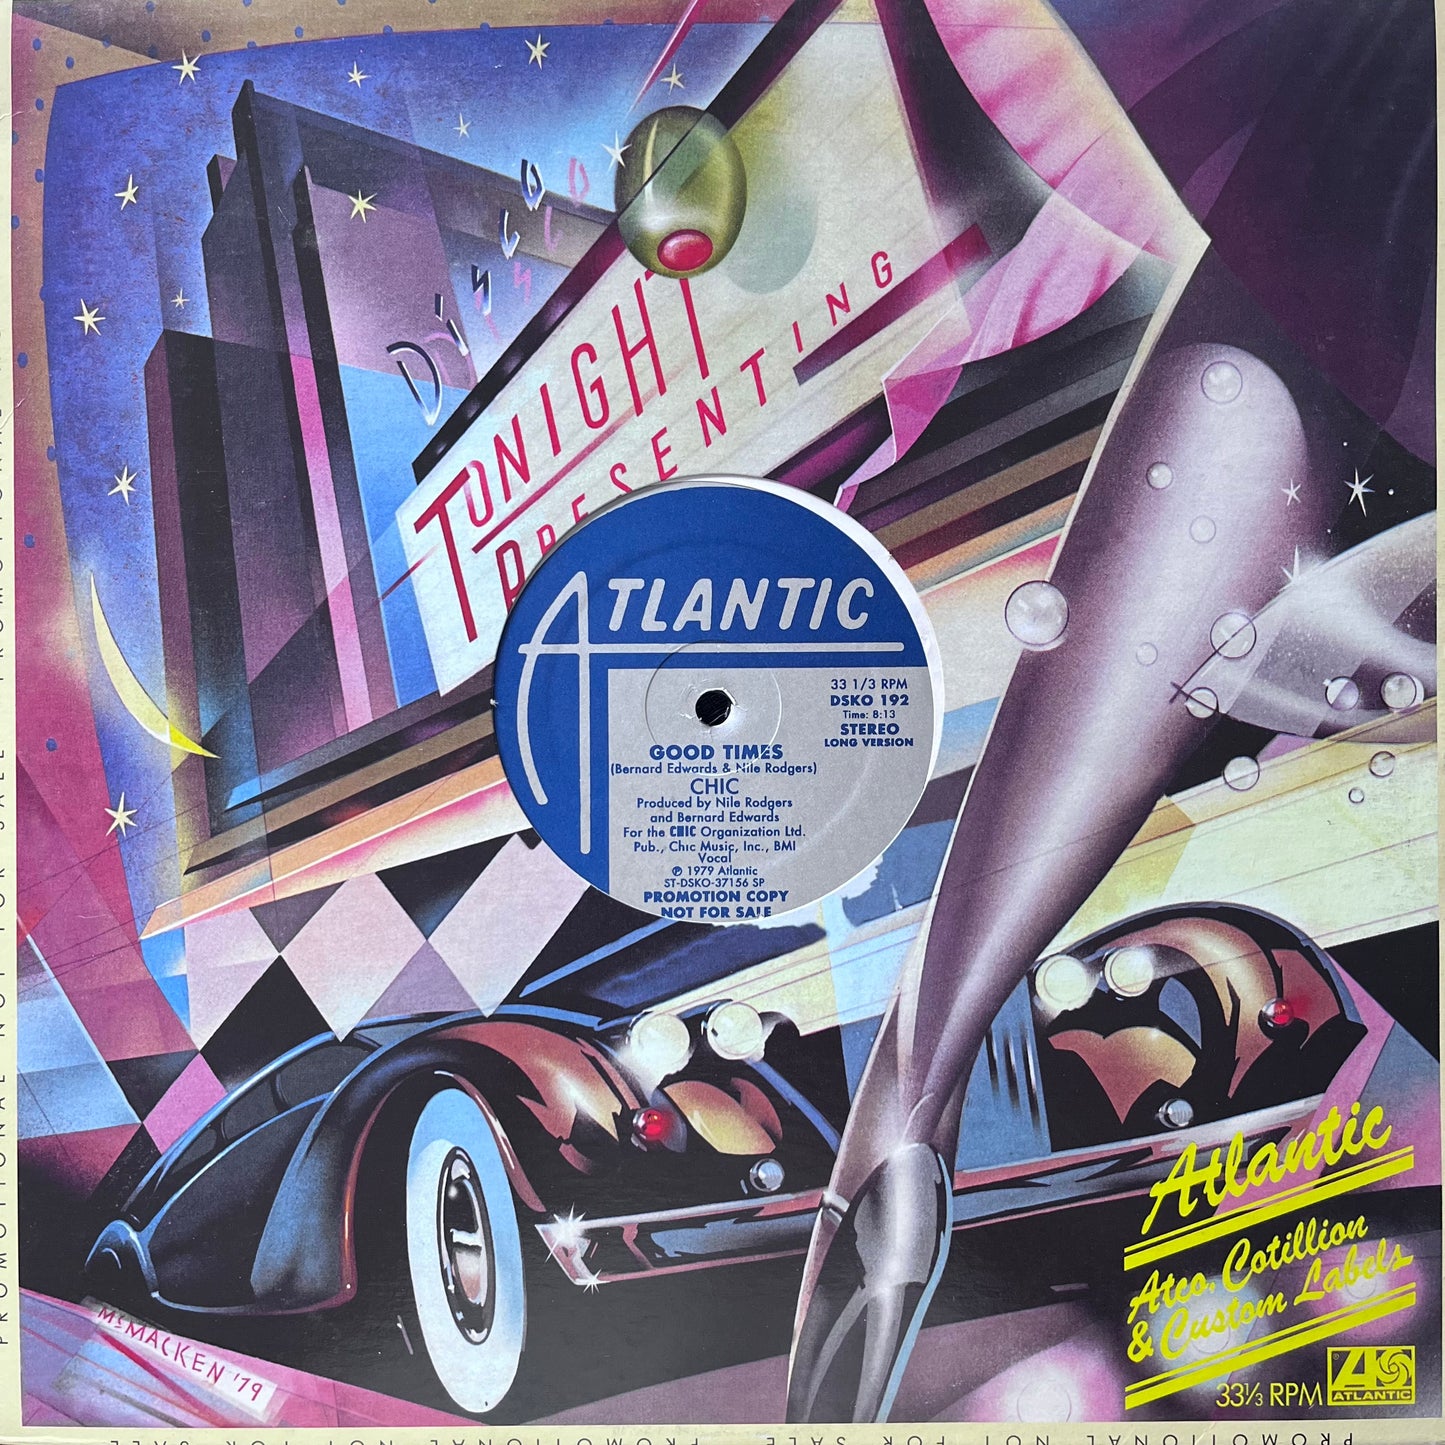 Chic “Good Times” 2 Track 12inch Vinyl Record on Atlantic Records Promo Disco Single